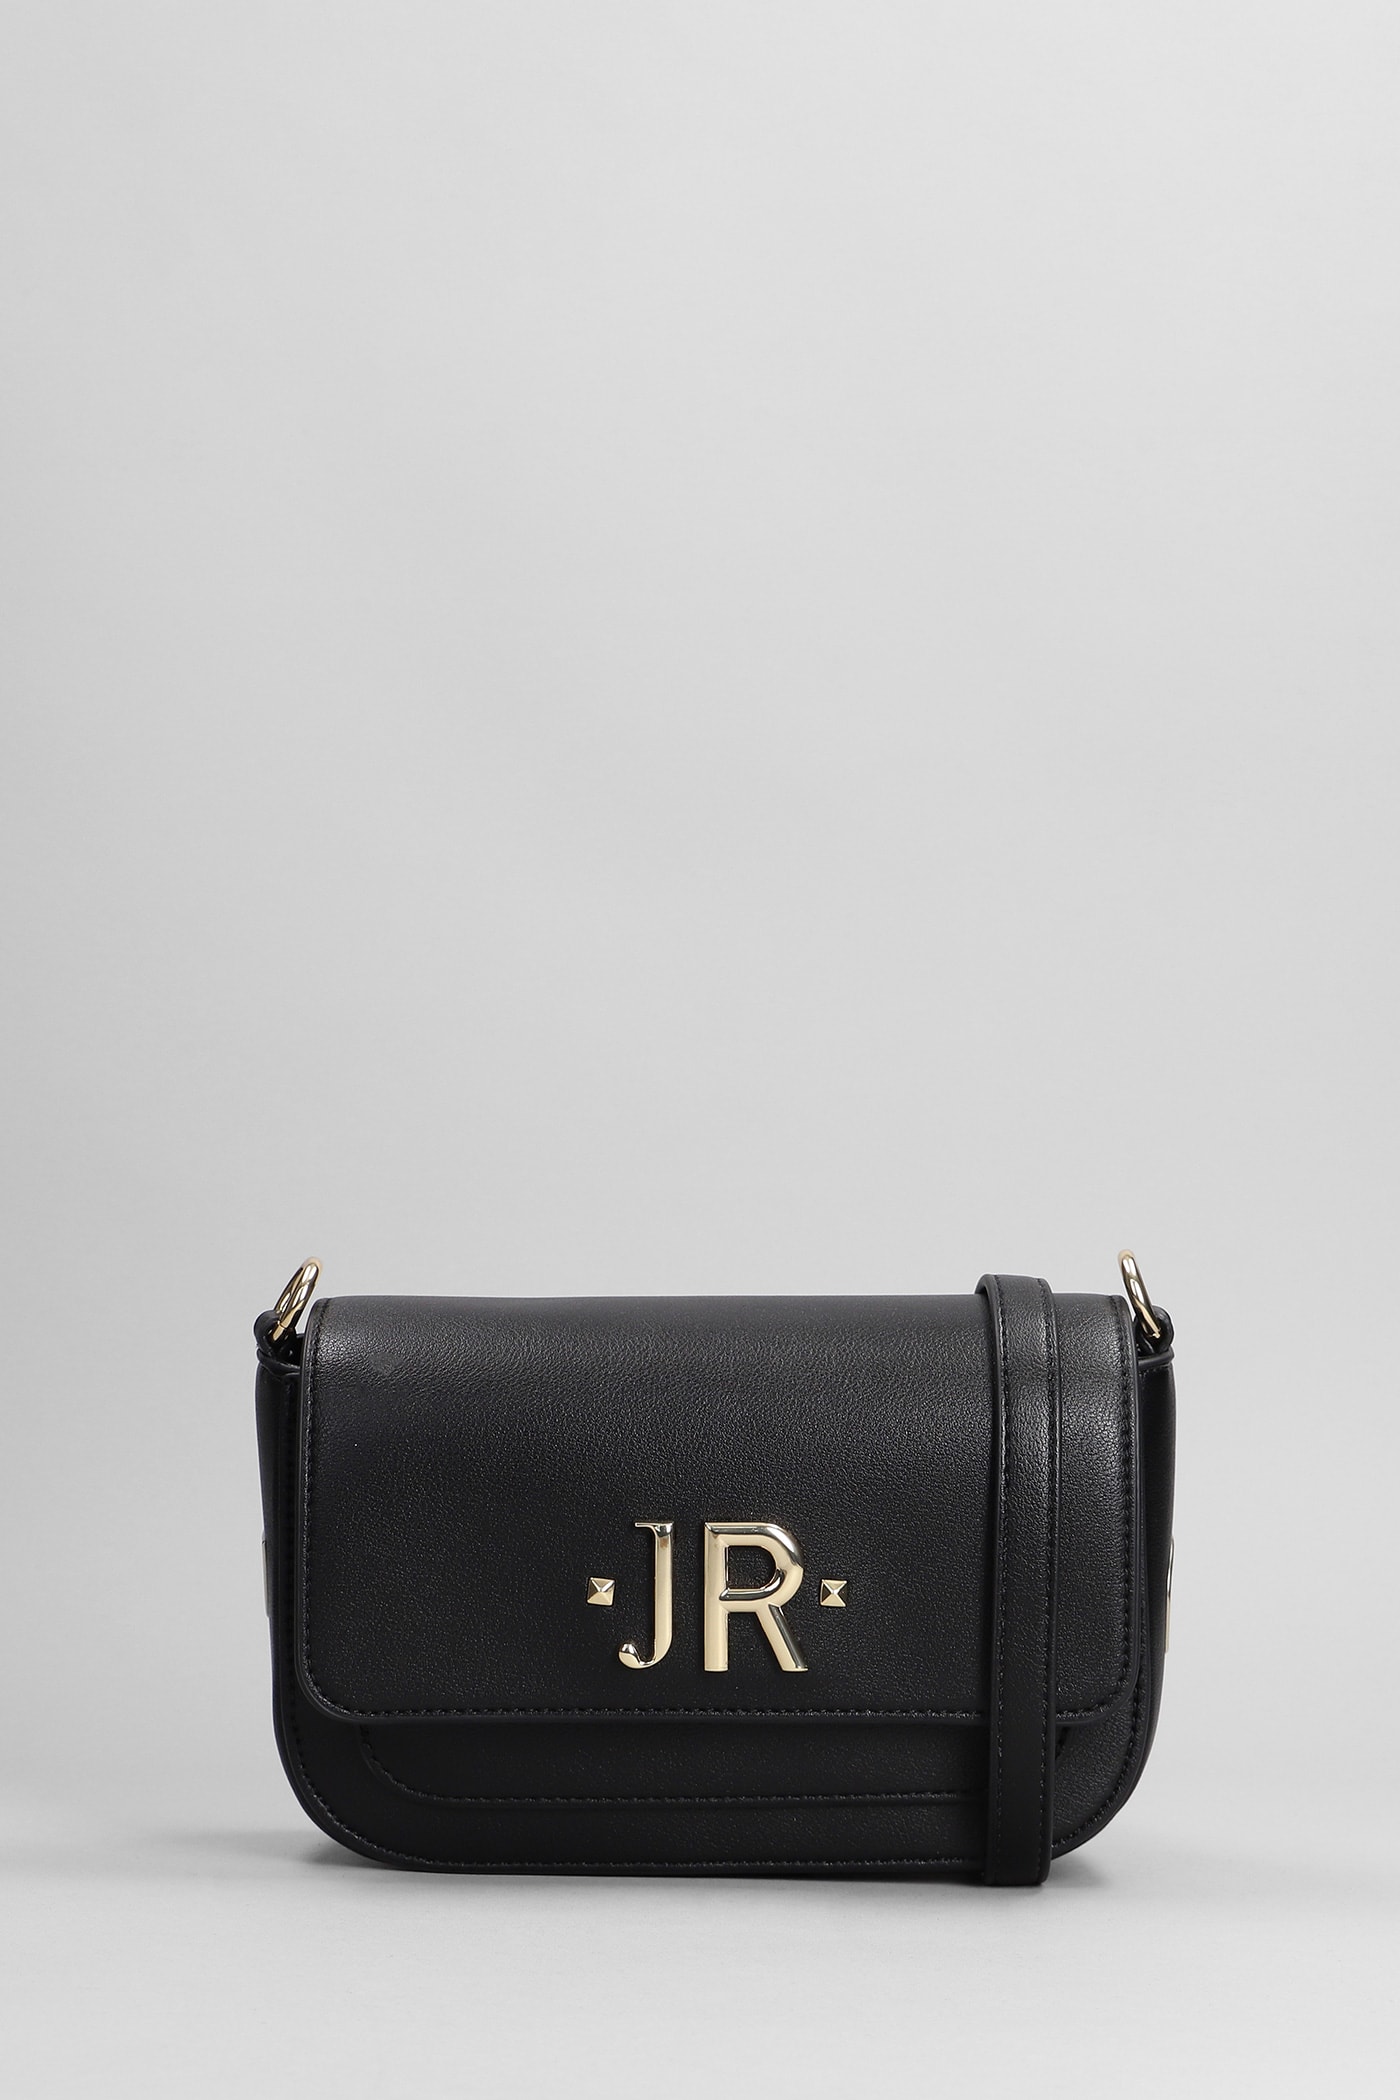 John Richmond Ranaide Shoulder Bag In Black Leather